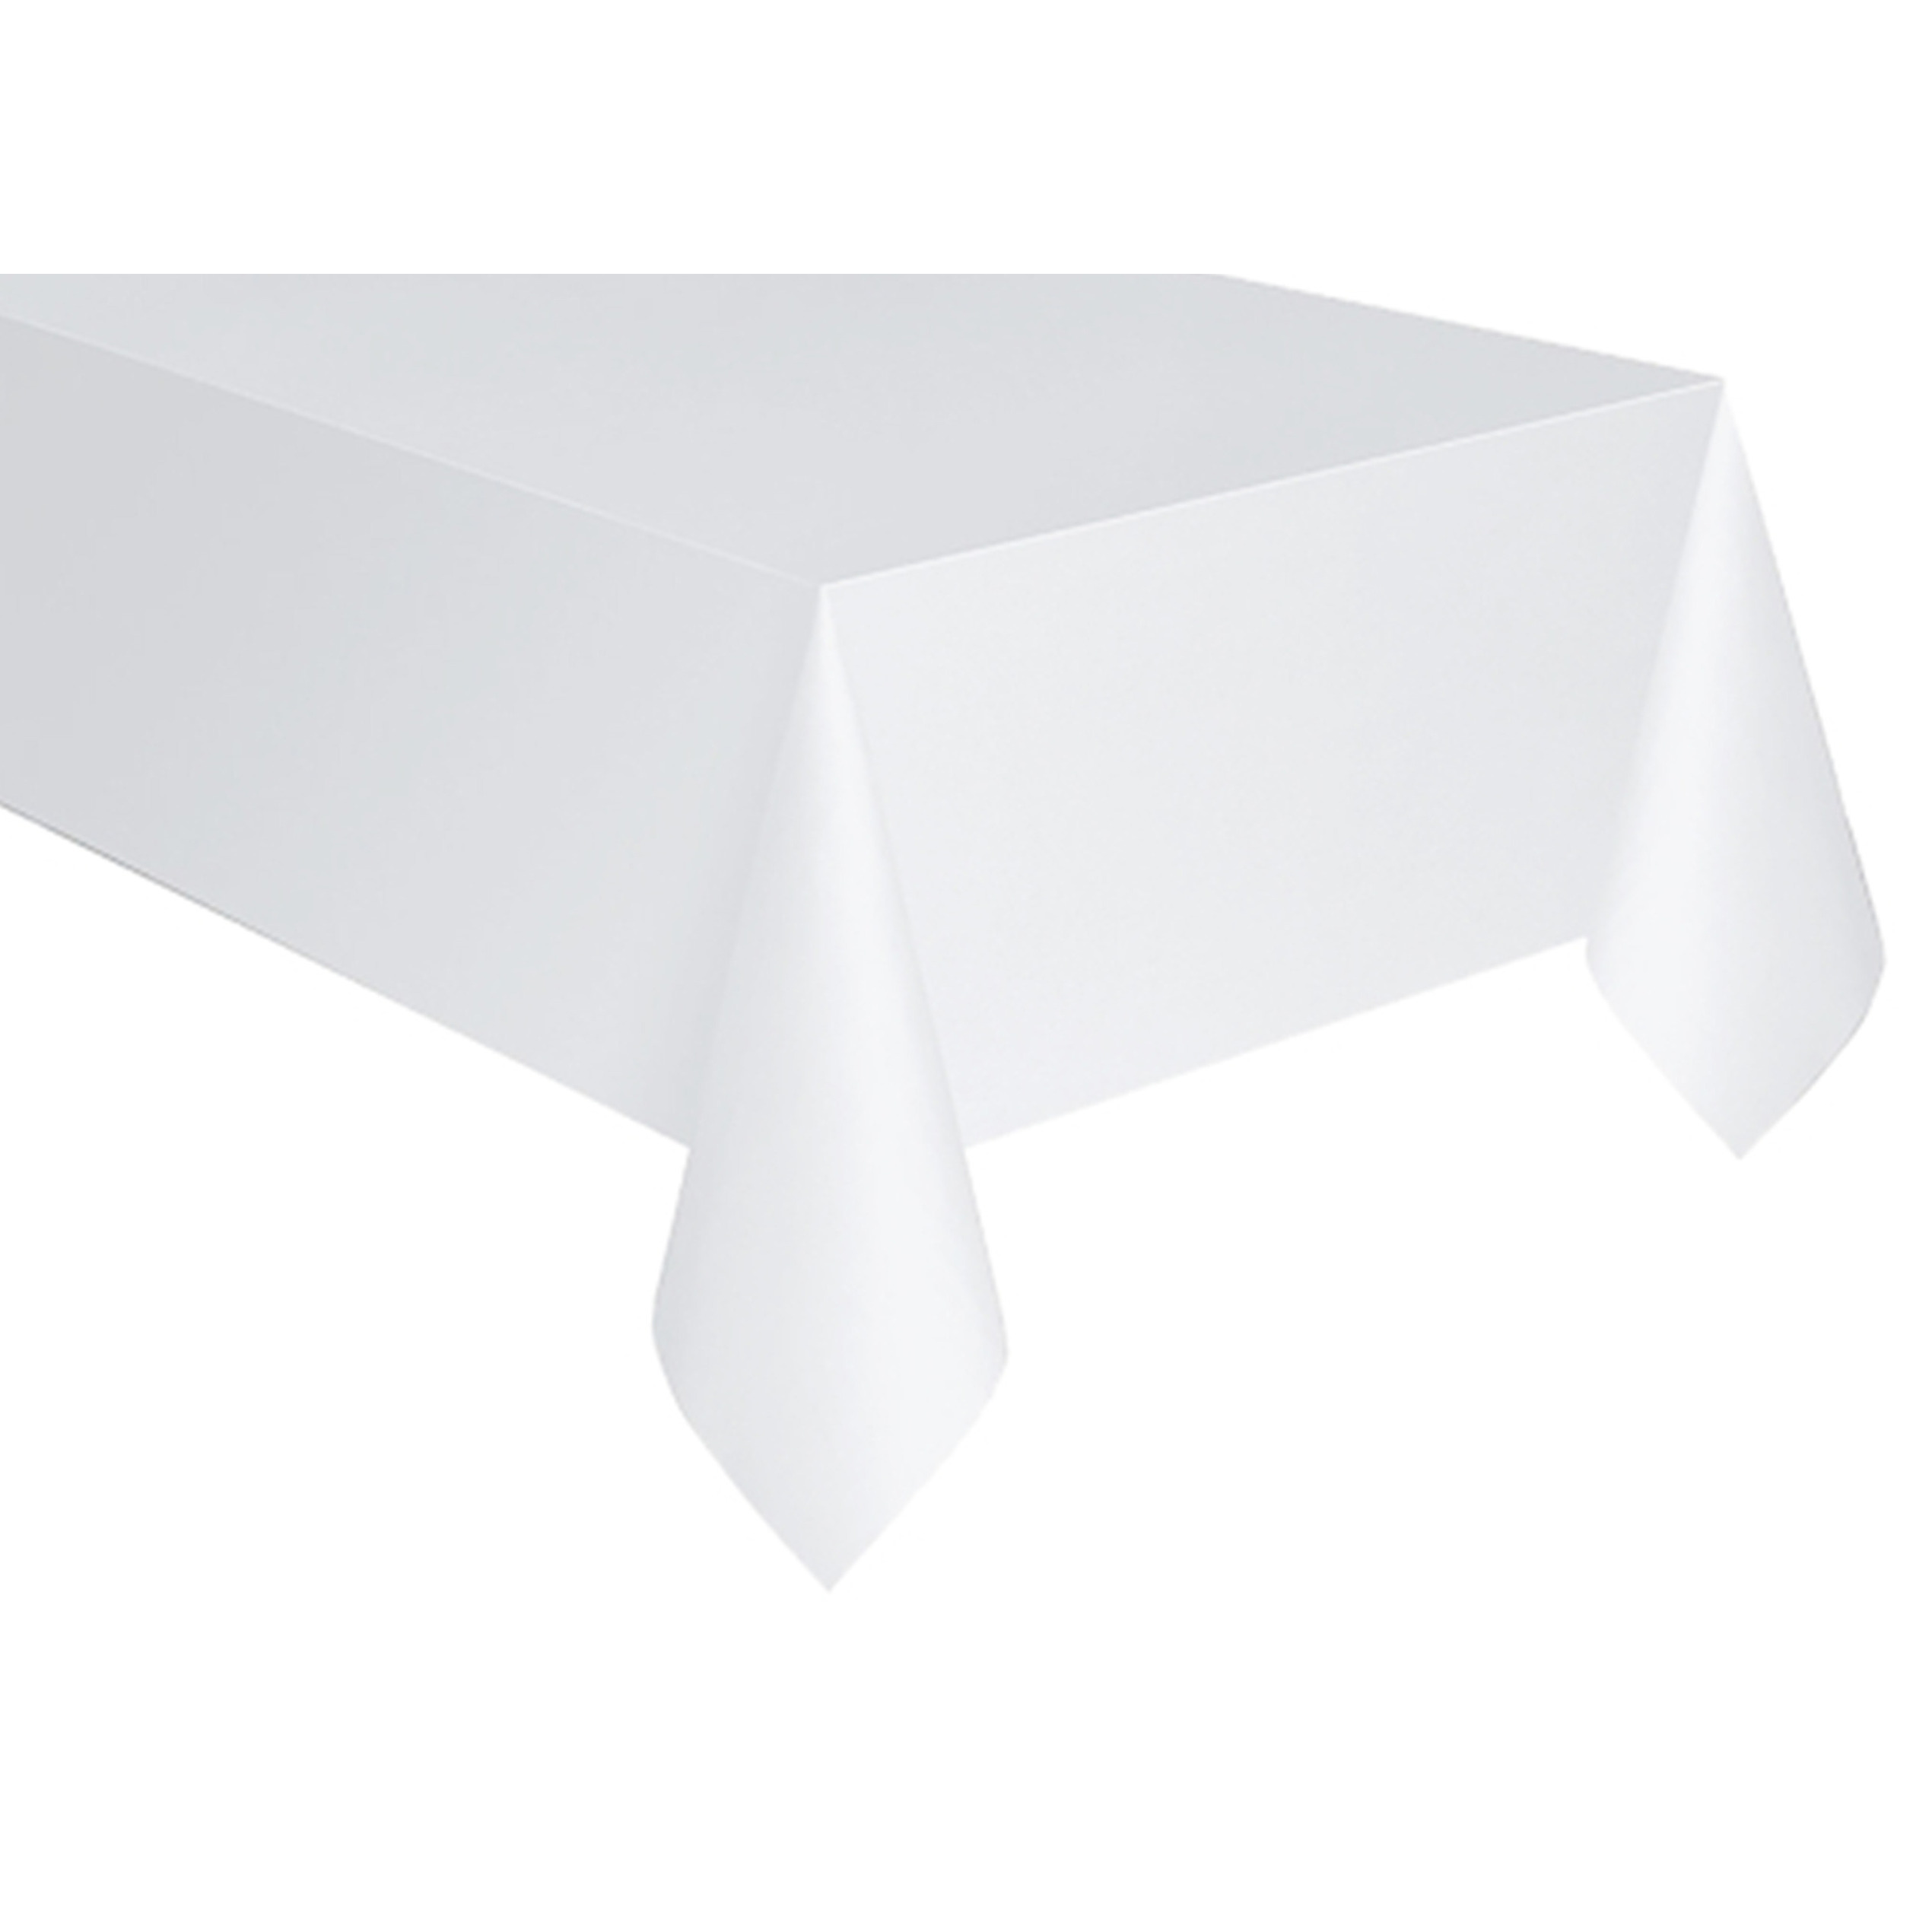 Tafelkleed-tafellaken wit 140 x 170 cm polyester Bruiloft tafelkleden